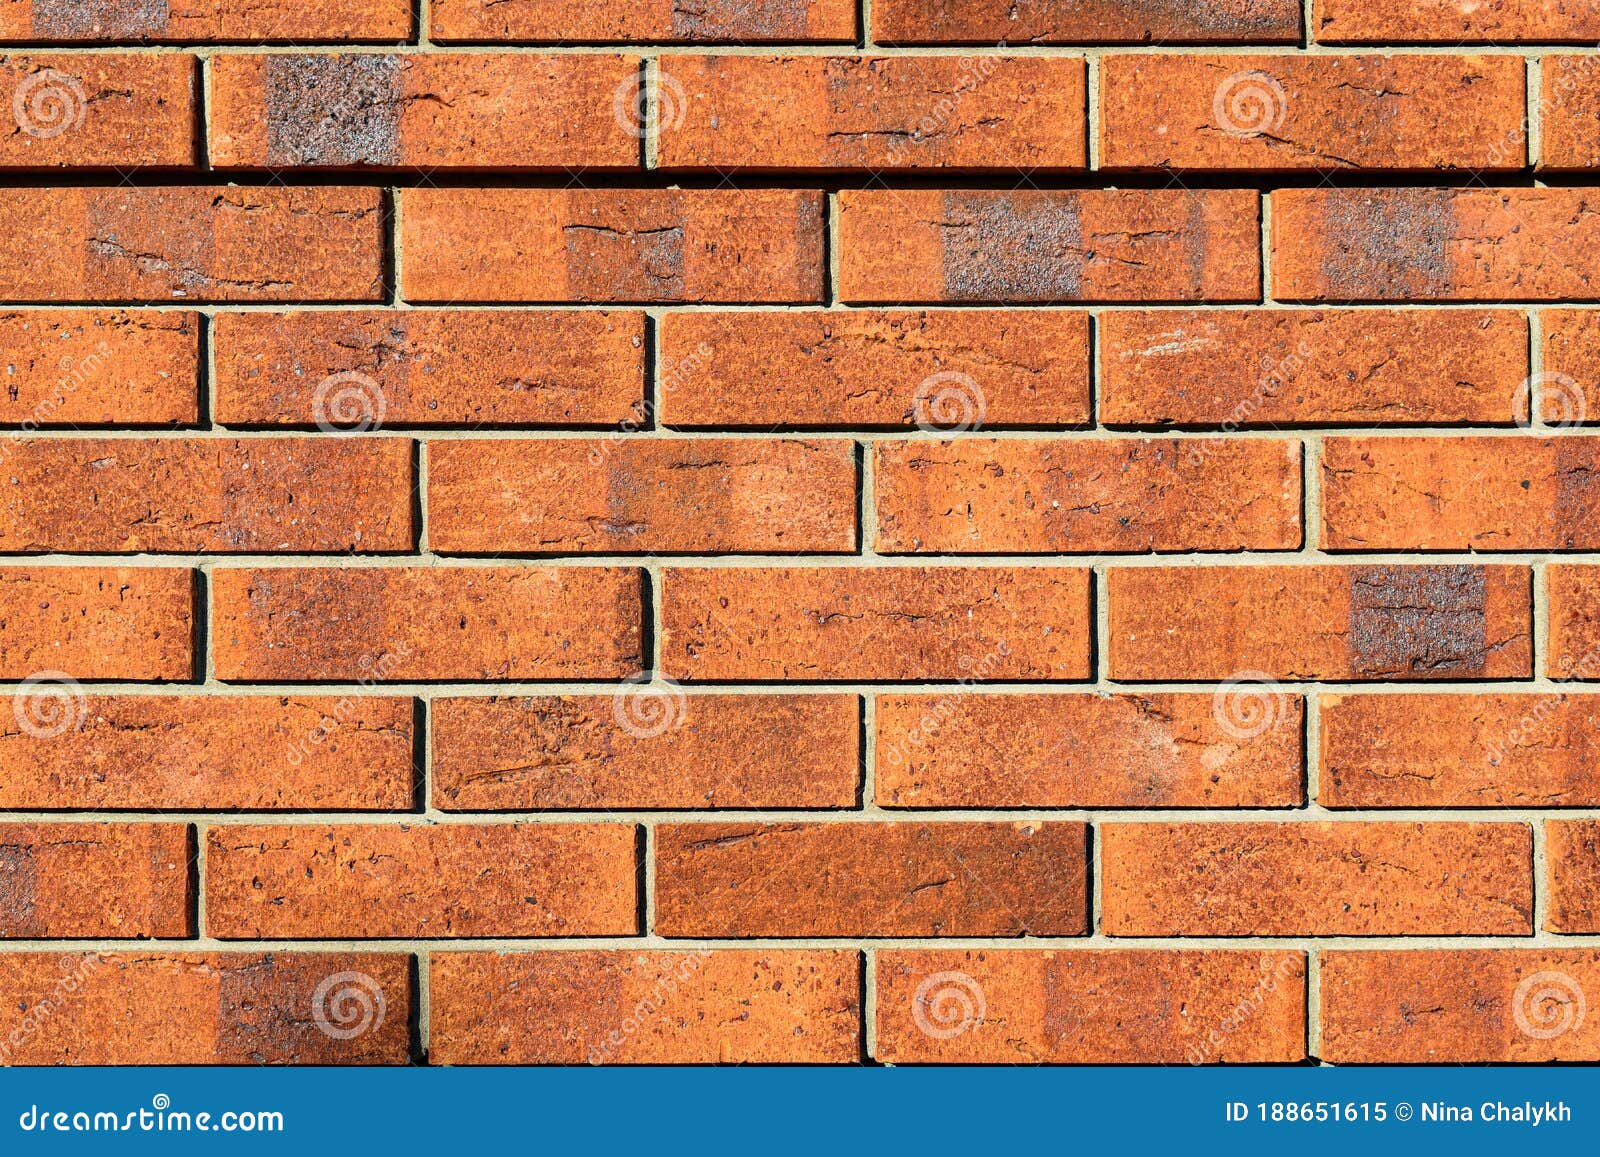 Brick Wall Background. Decorative Brickwork from a Smooth New Brick